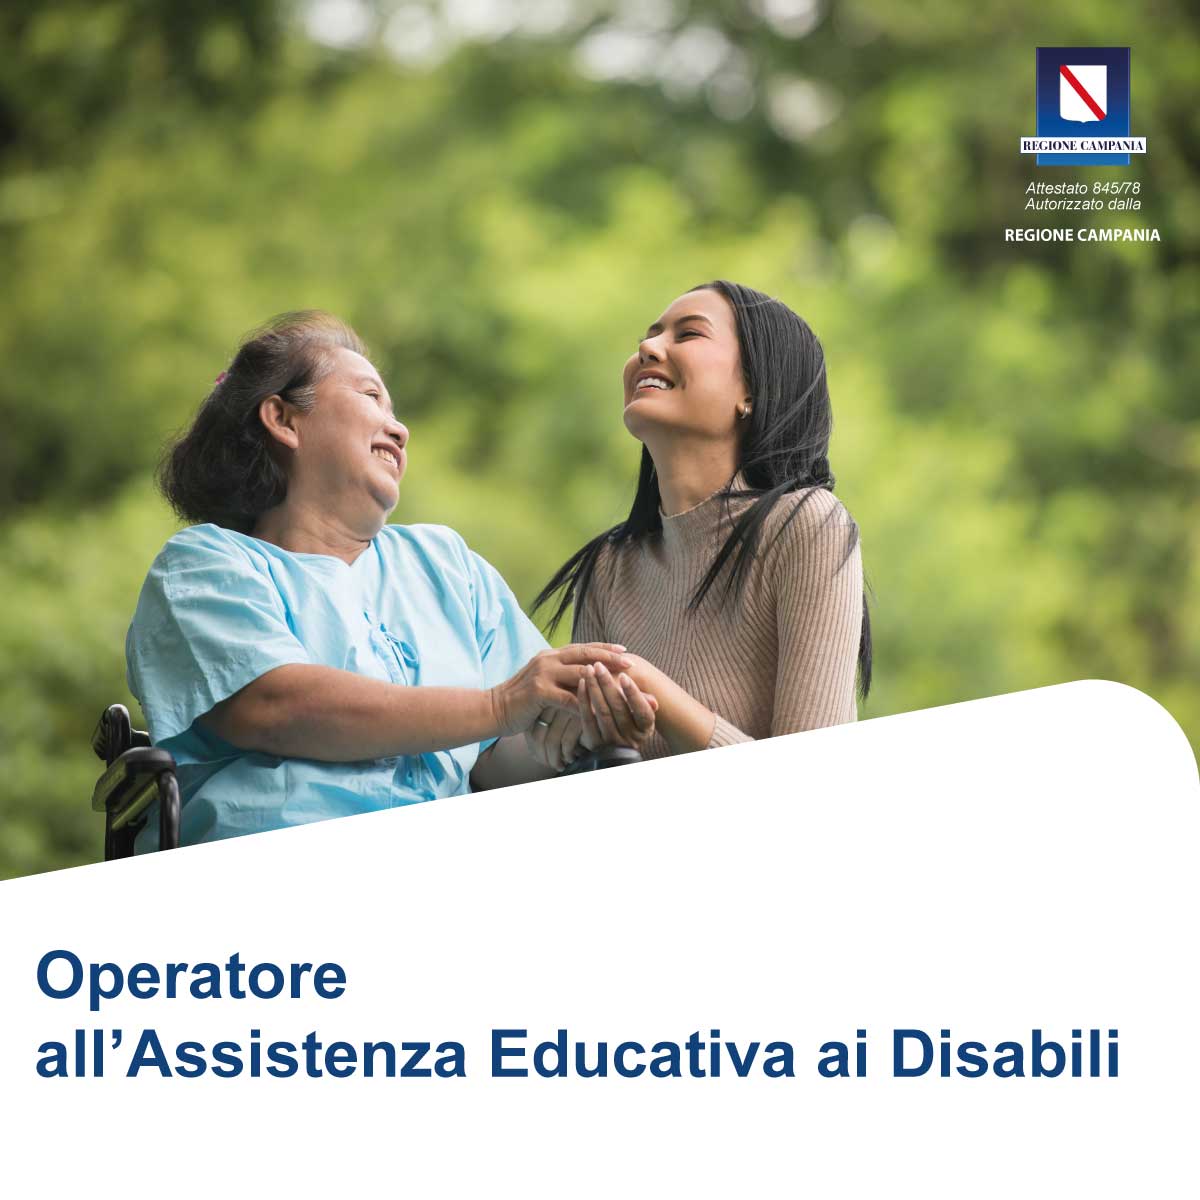 Operatore all’Assistenza Educativa ai Disabili